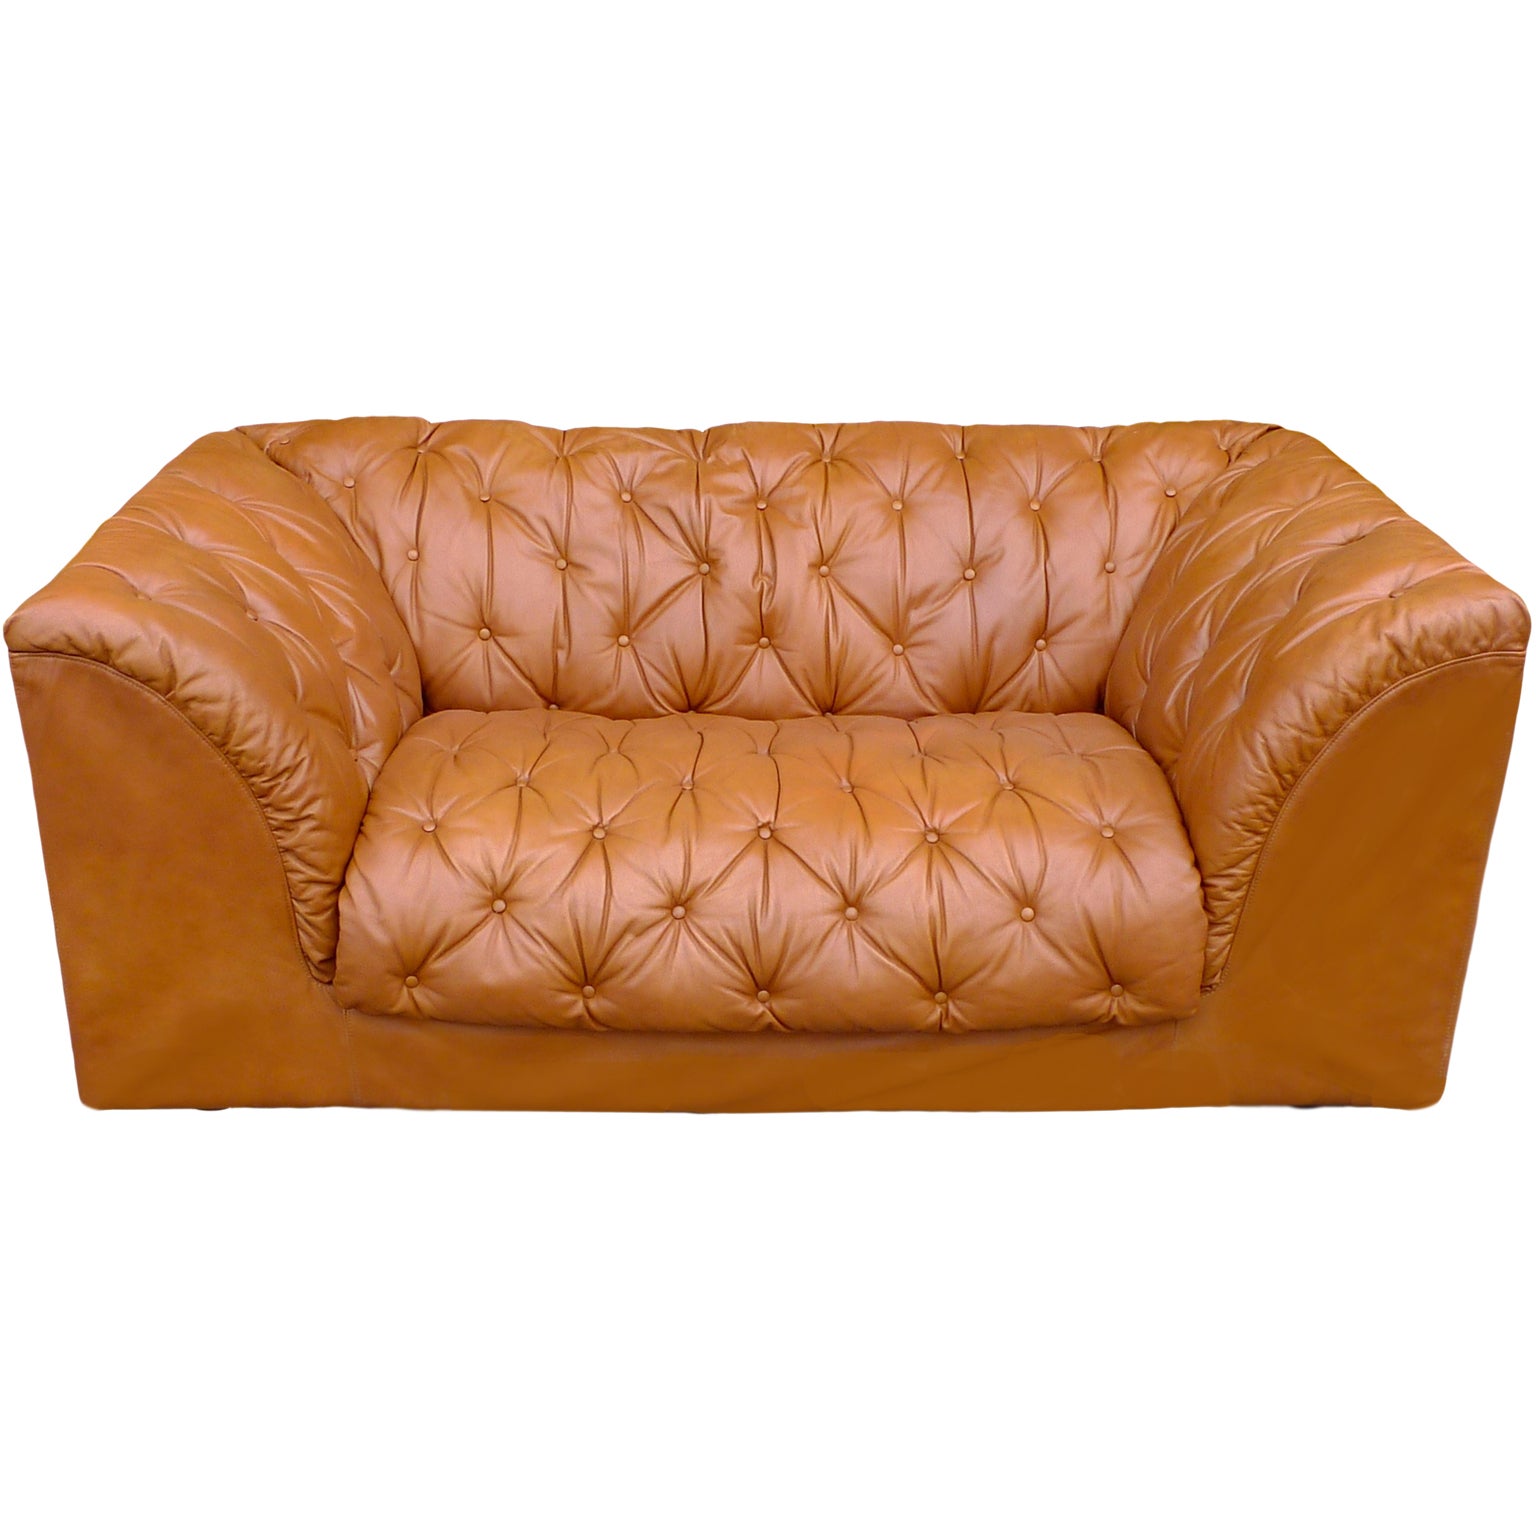 1970's Italian Tufted Leather Sofa by Ambienti Bernini For Sale